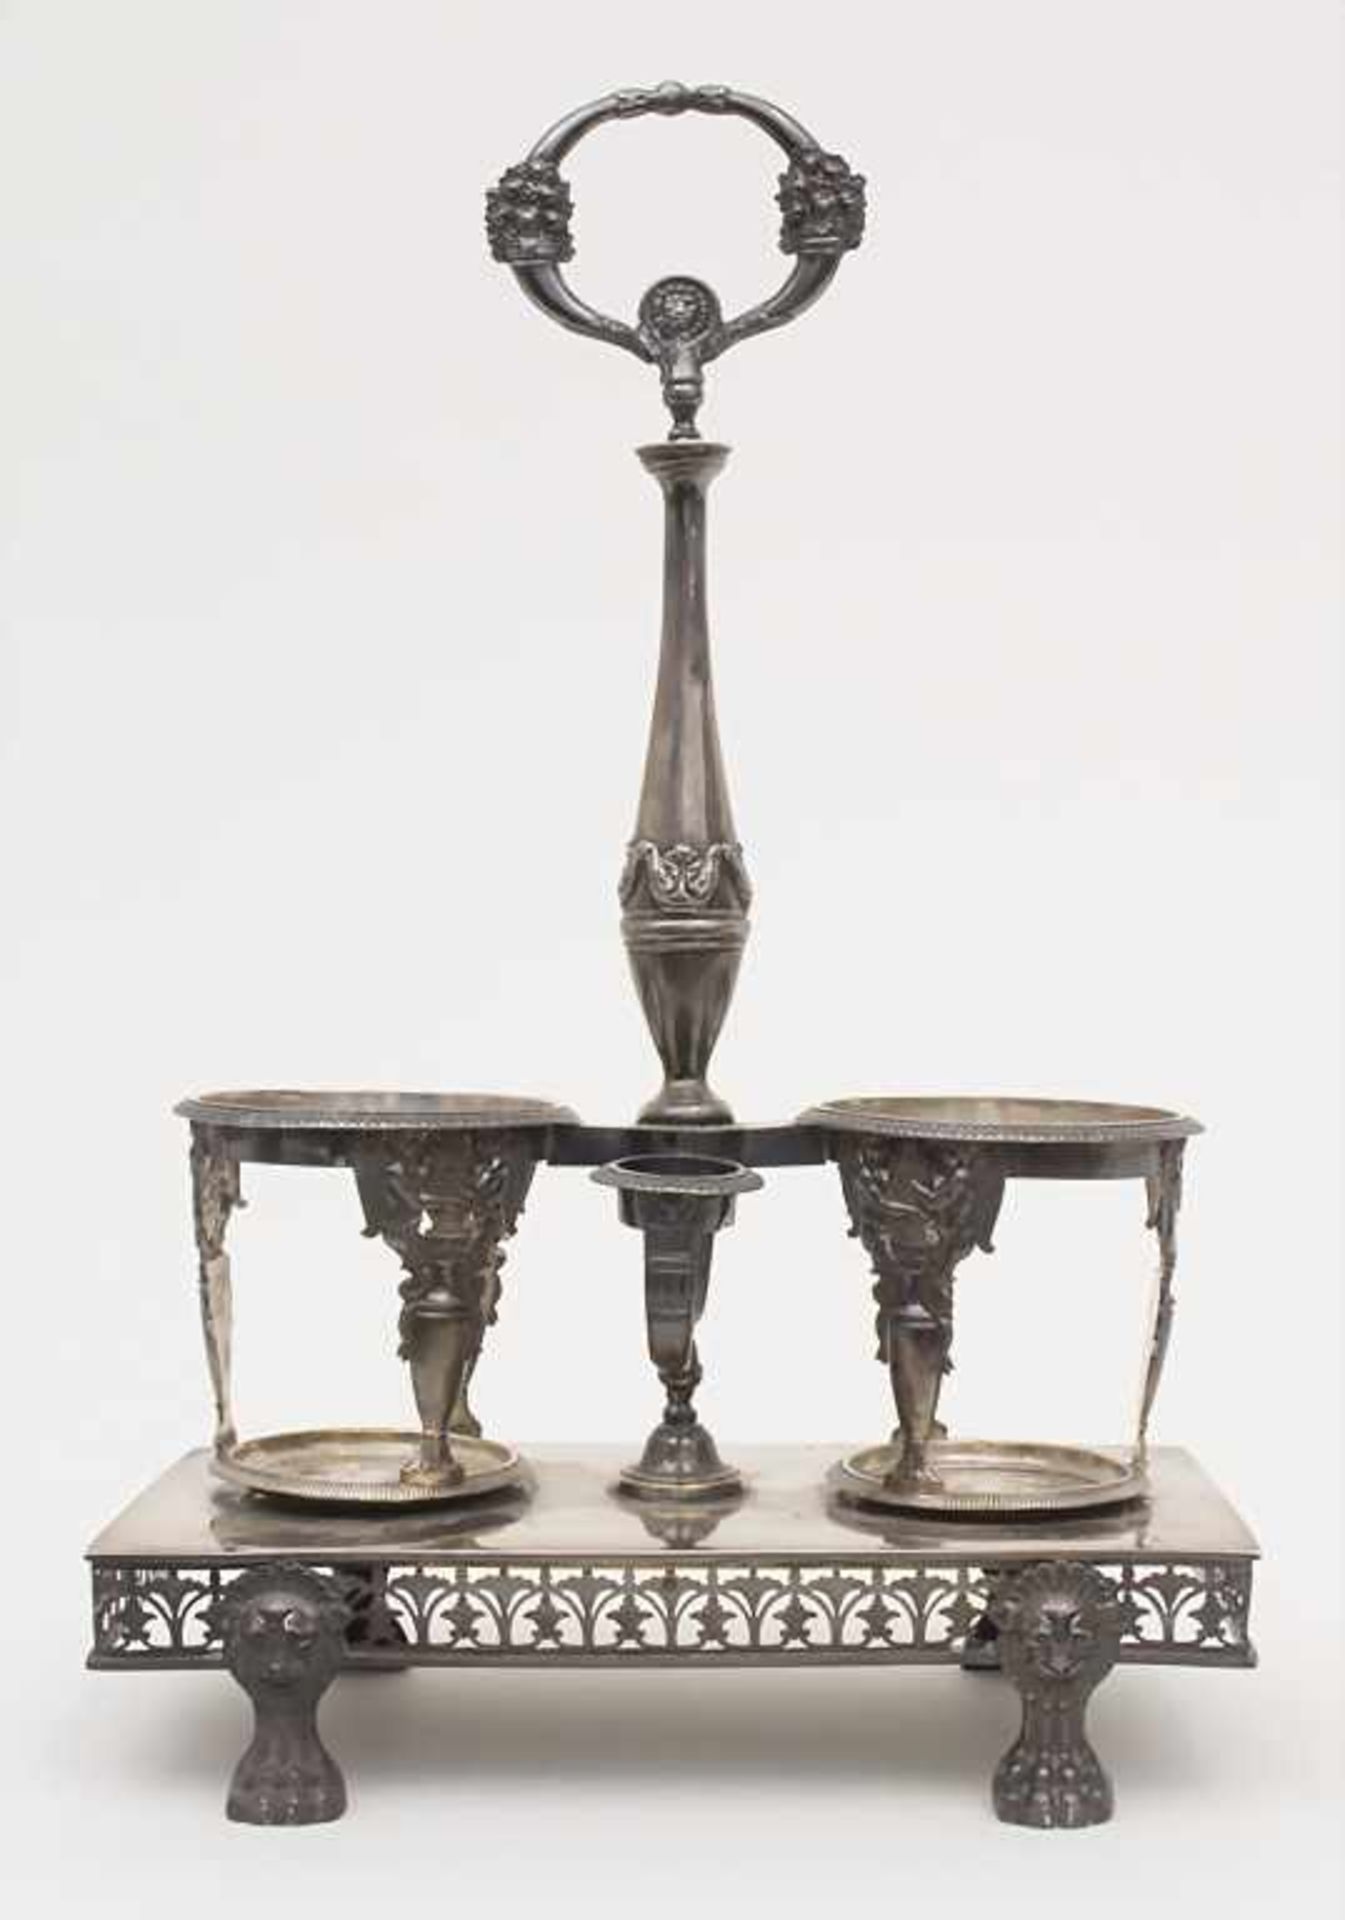 Empire-Menage / A silver cruet stand, Meister Jean-Pierre Bibron, Paris, 1803-1809Material: Silber